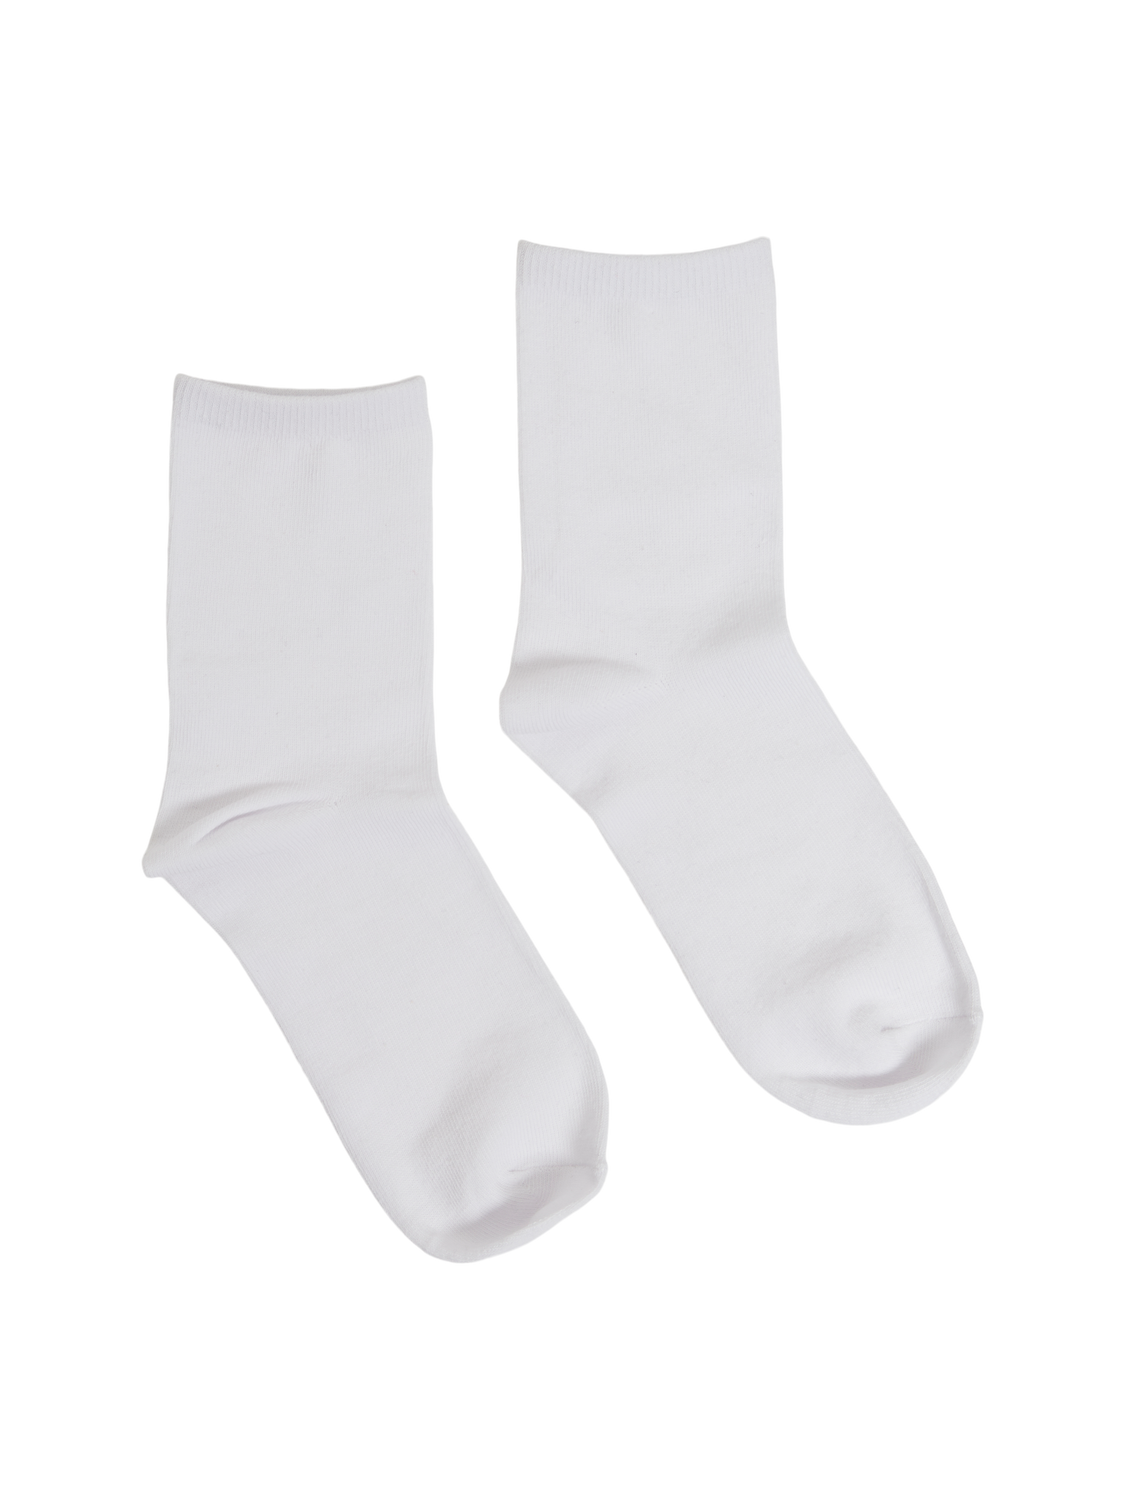 VIVIOLET Socks - Bright White